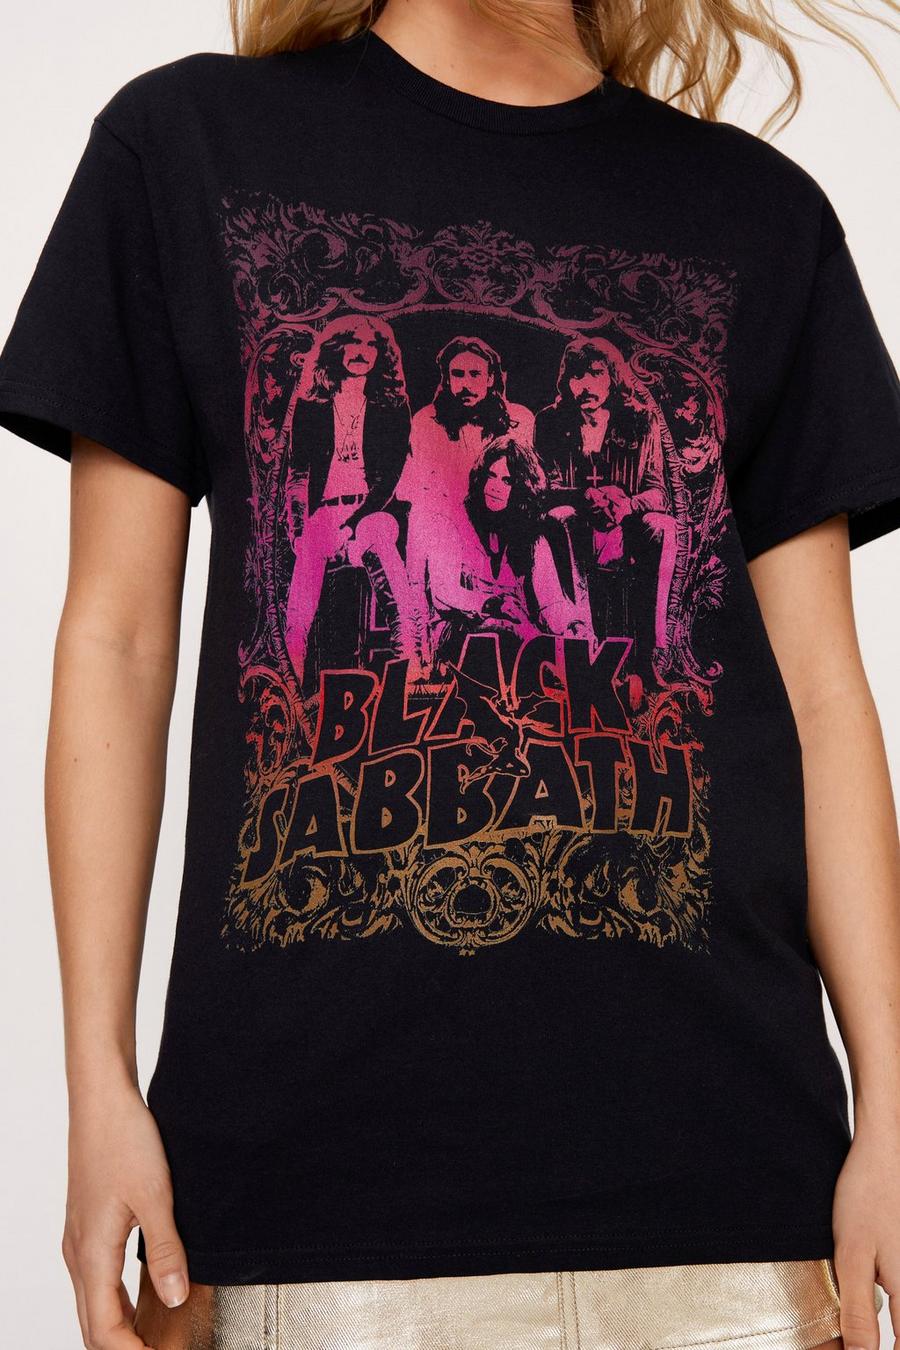 Black Sabbath Oversized Graphic T-shirt